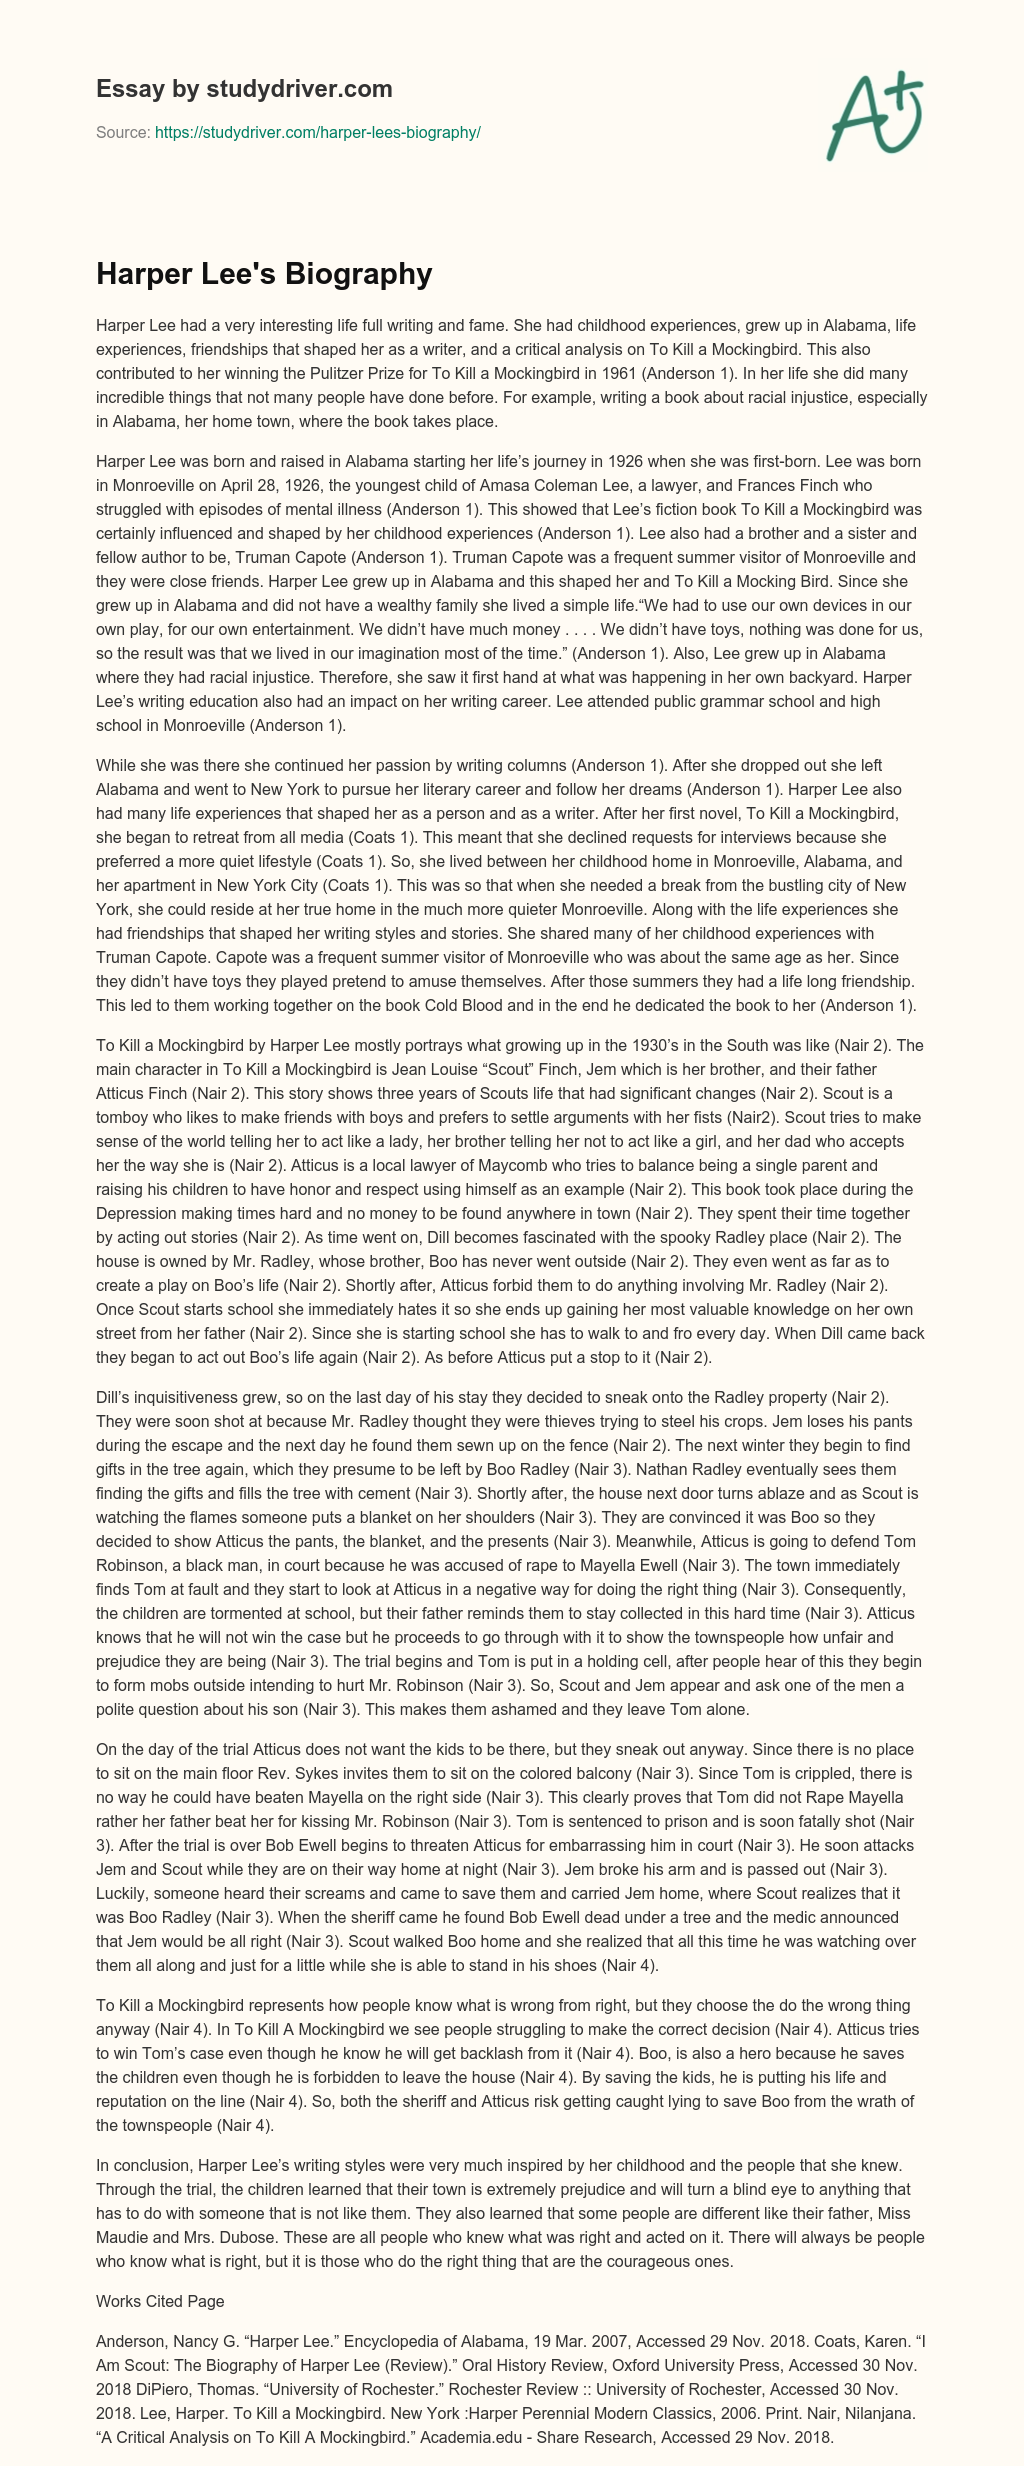 Harper Lee’s Biography essay